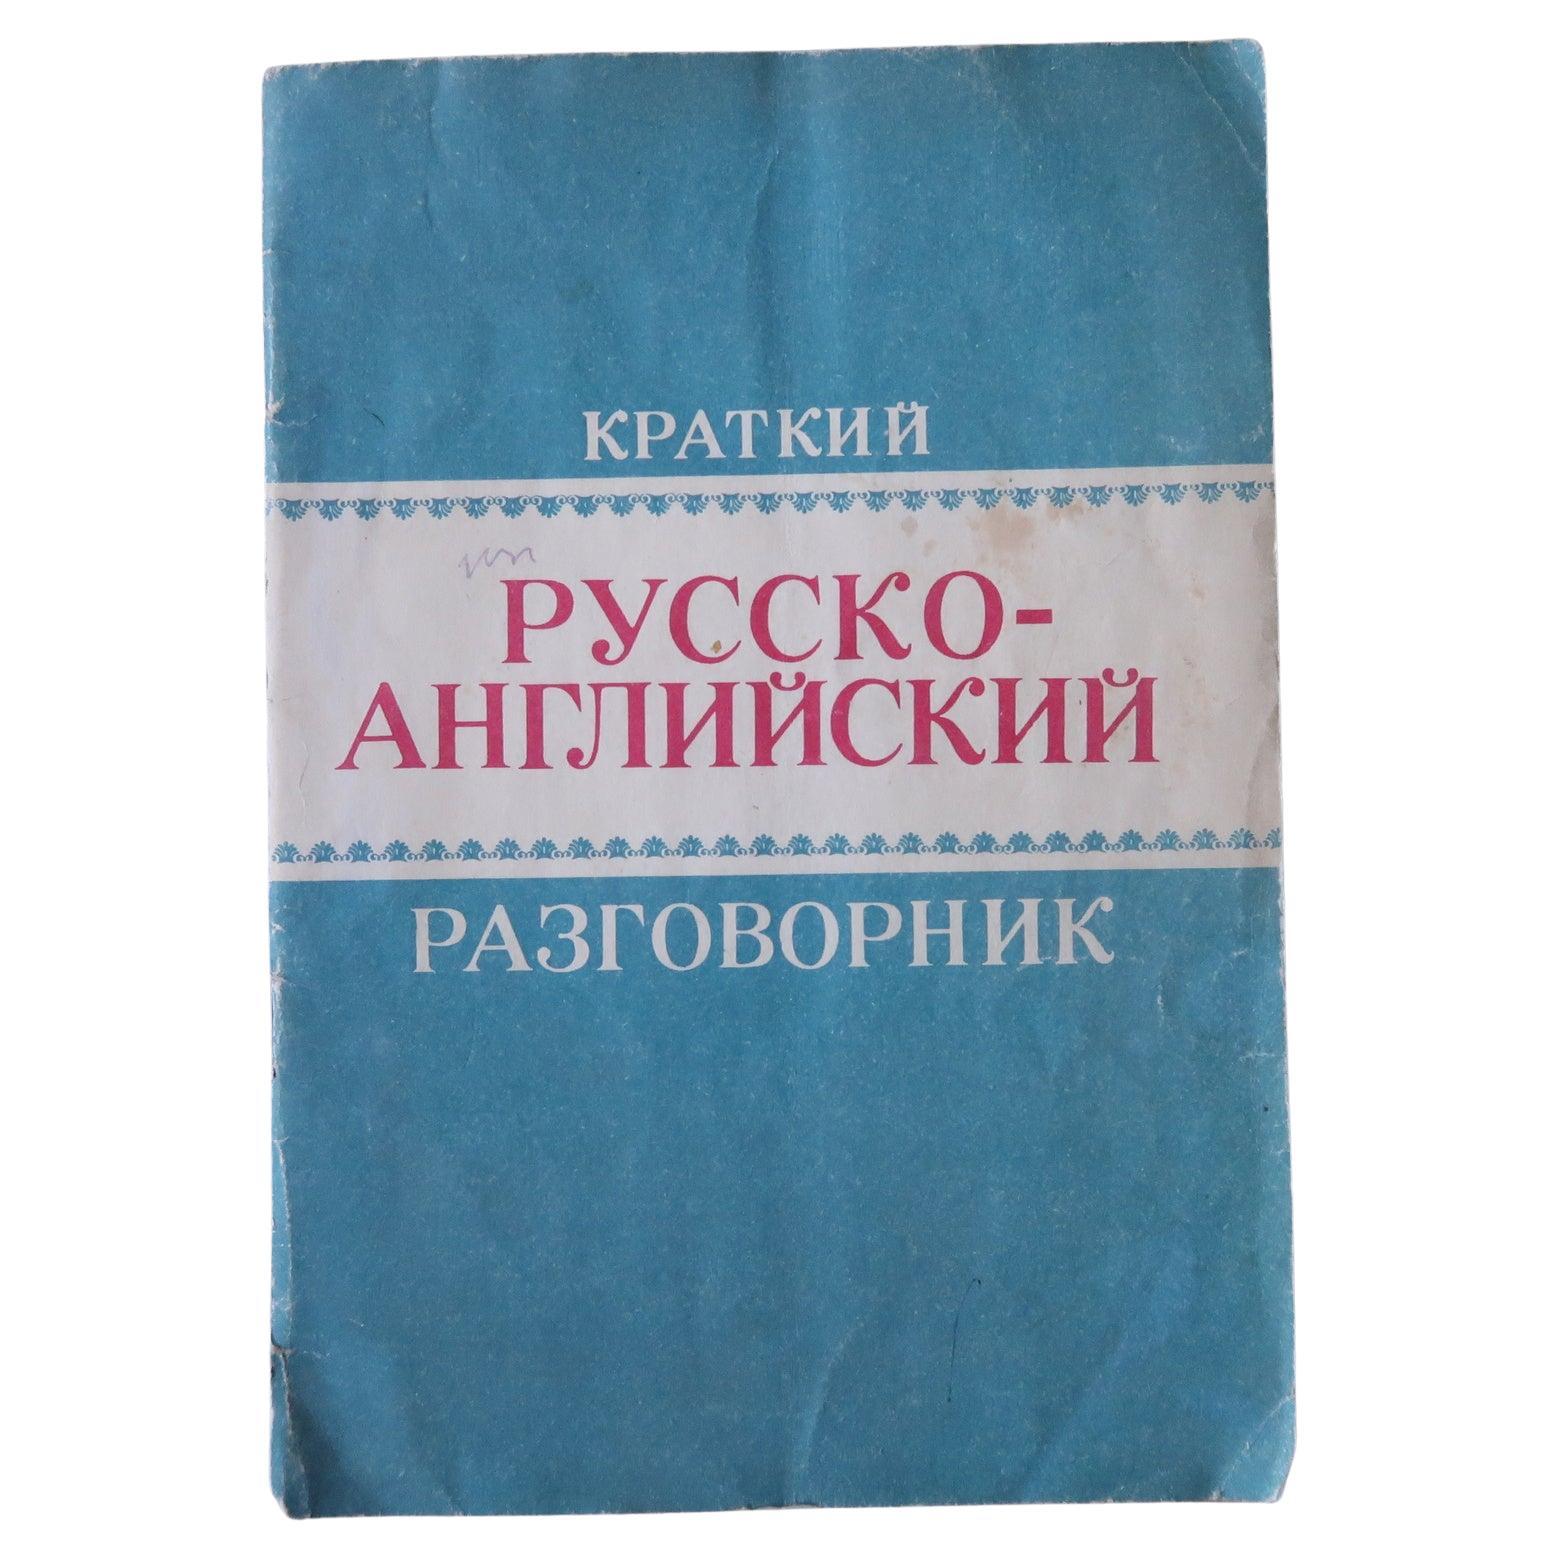 Vintage Language Companion: Brief Russian-English Phrasebook, 1990, USSR, 1J142 For Sale